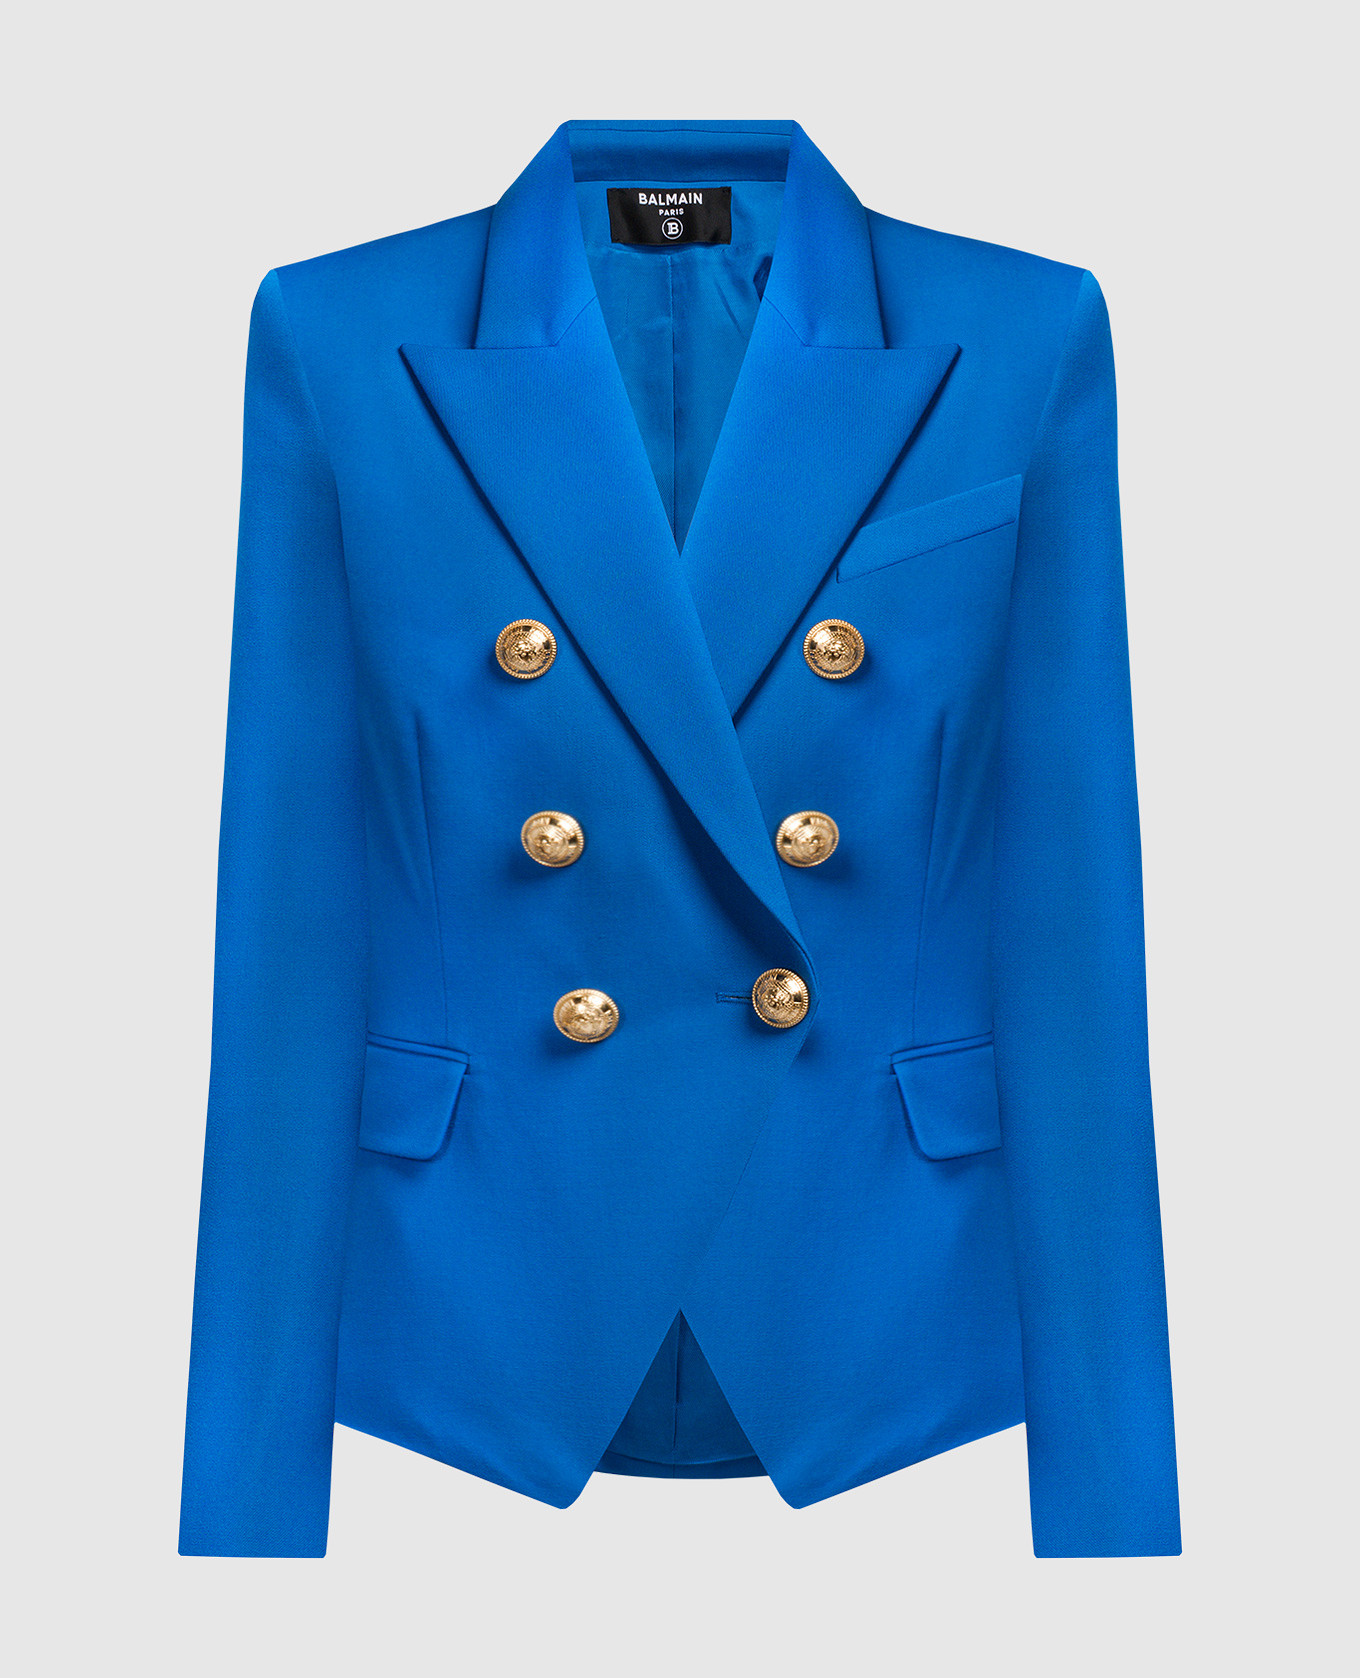 Blue double-breasted woolen jacket